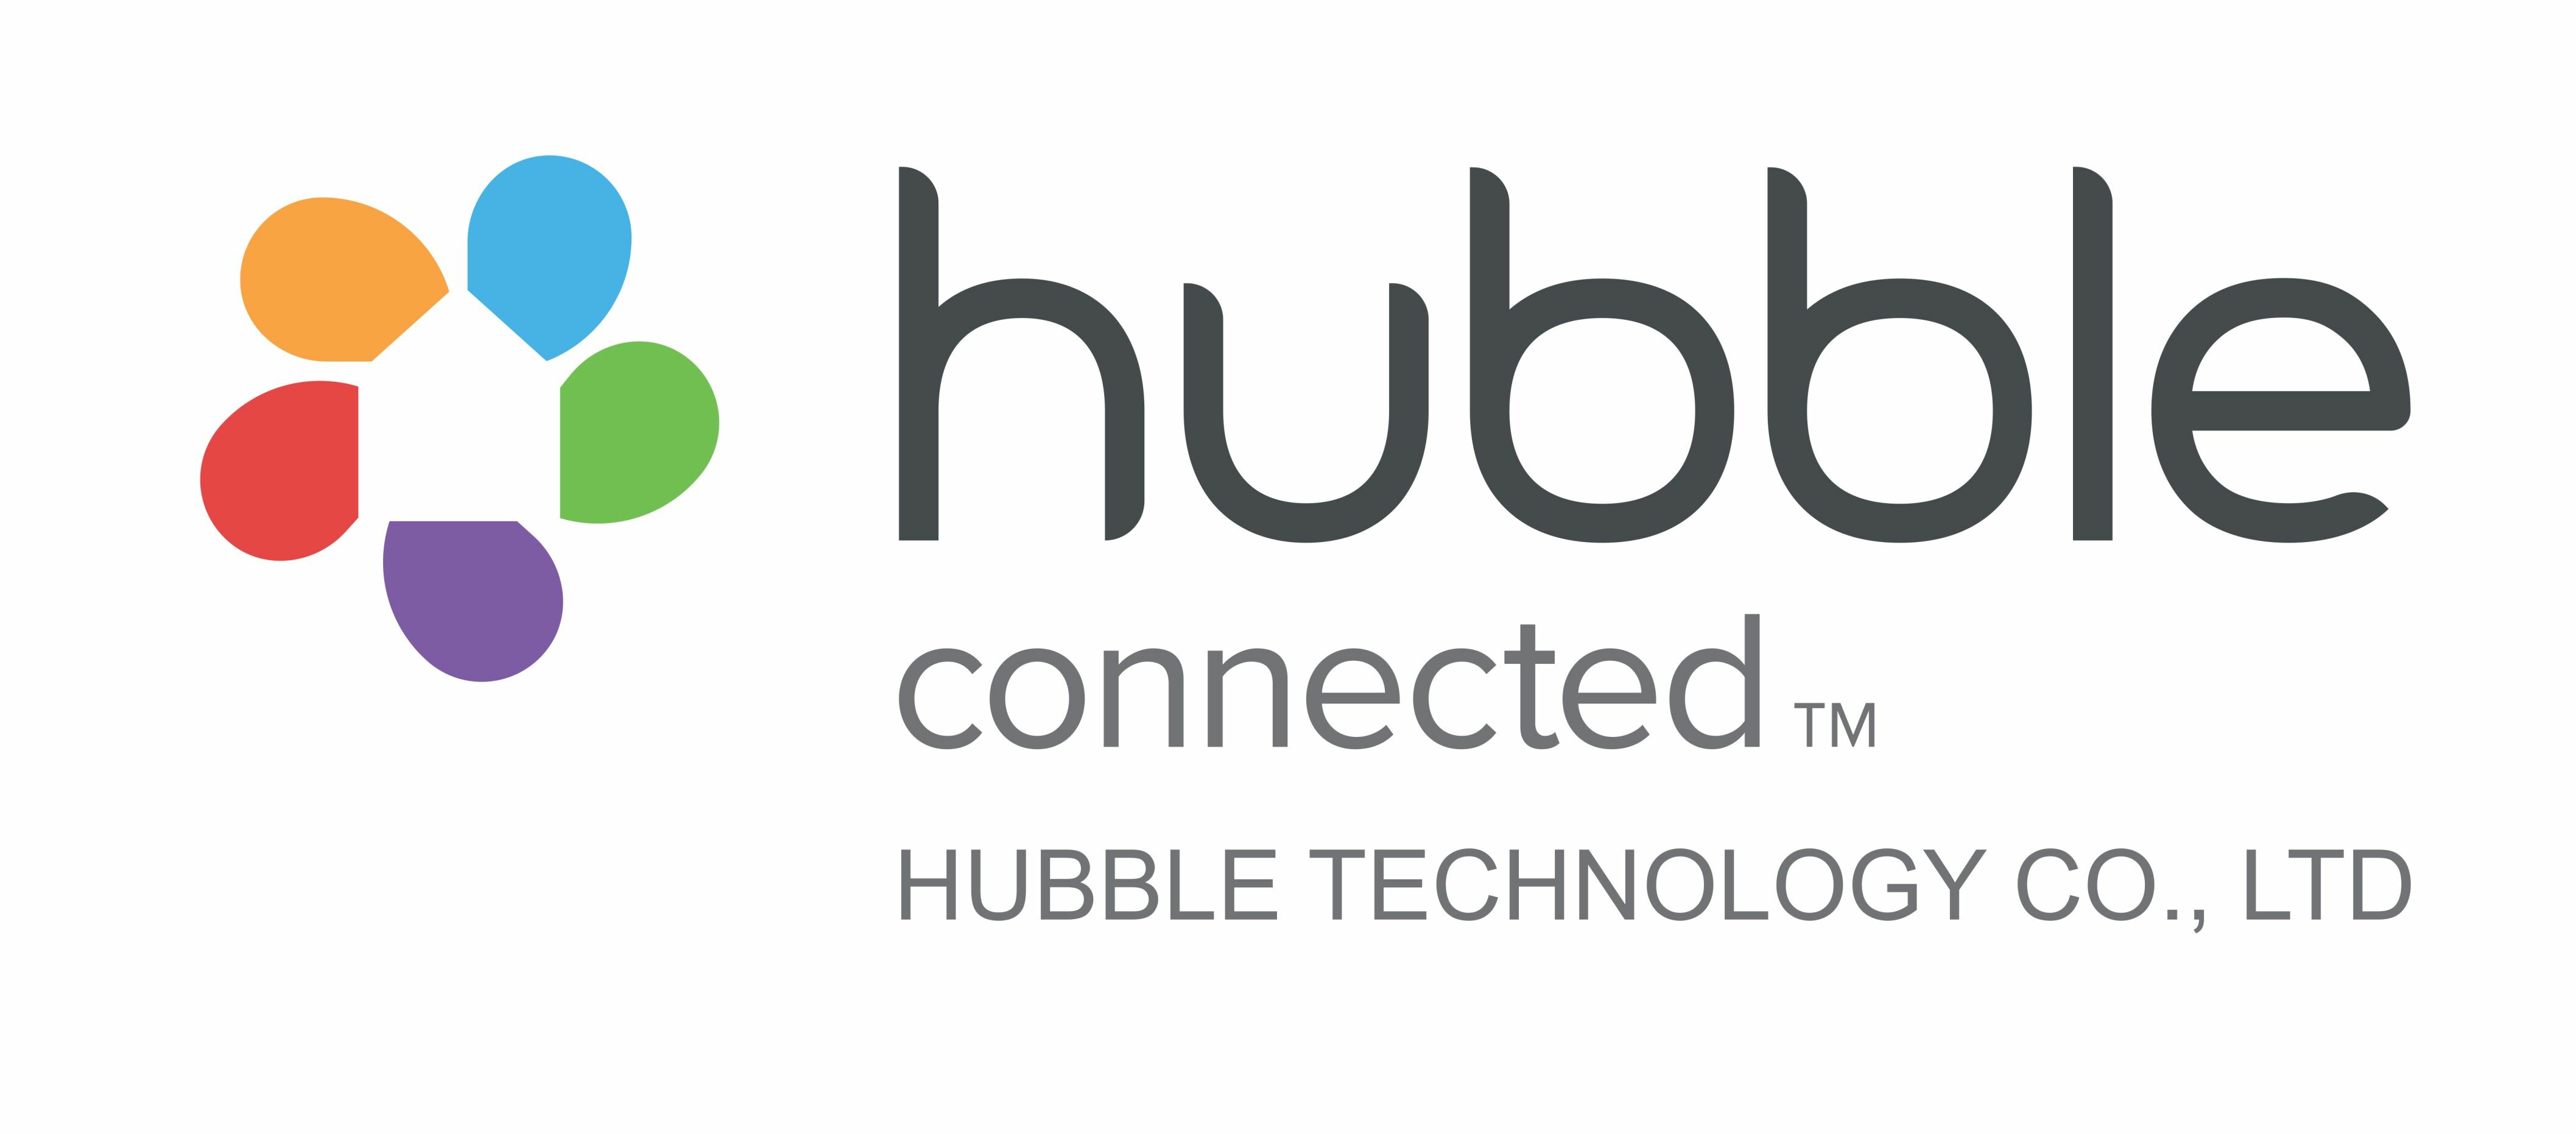 HUBBLE TECHNOLOGY CO., LTD